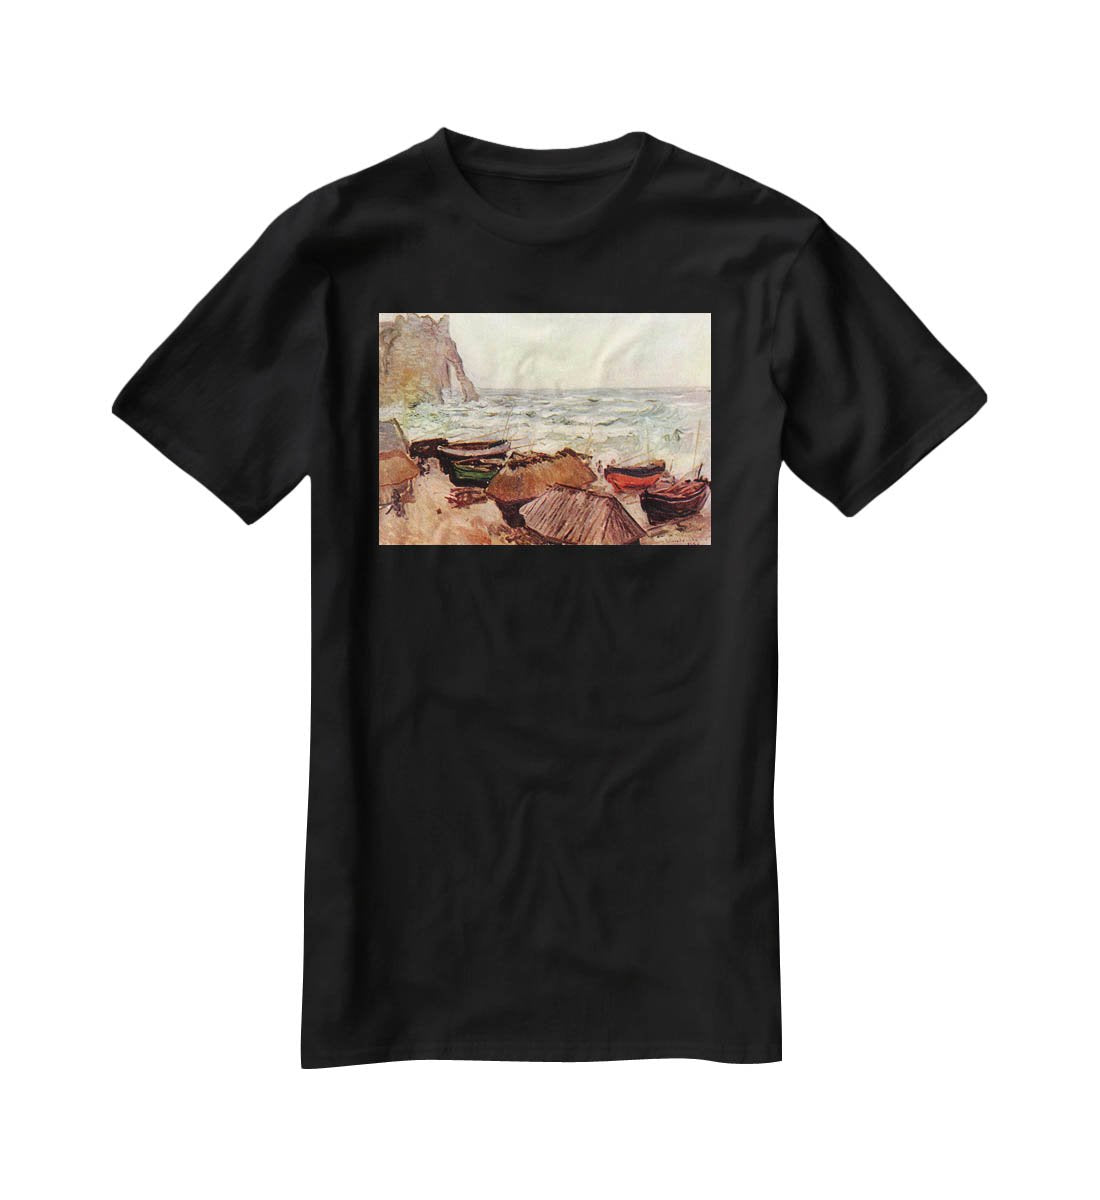 Durchbrochener rock at Etretat by Monet T-Shirt - Canvas Art Rocks - 1